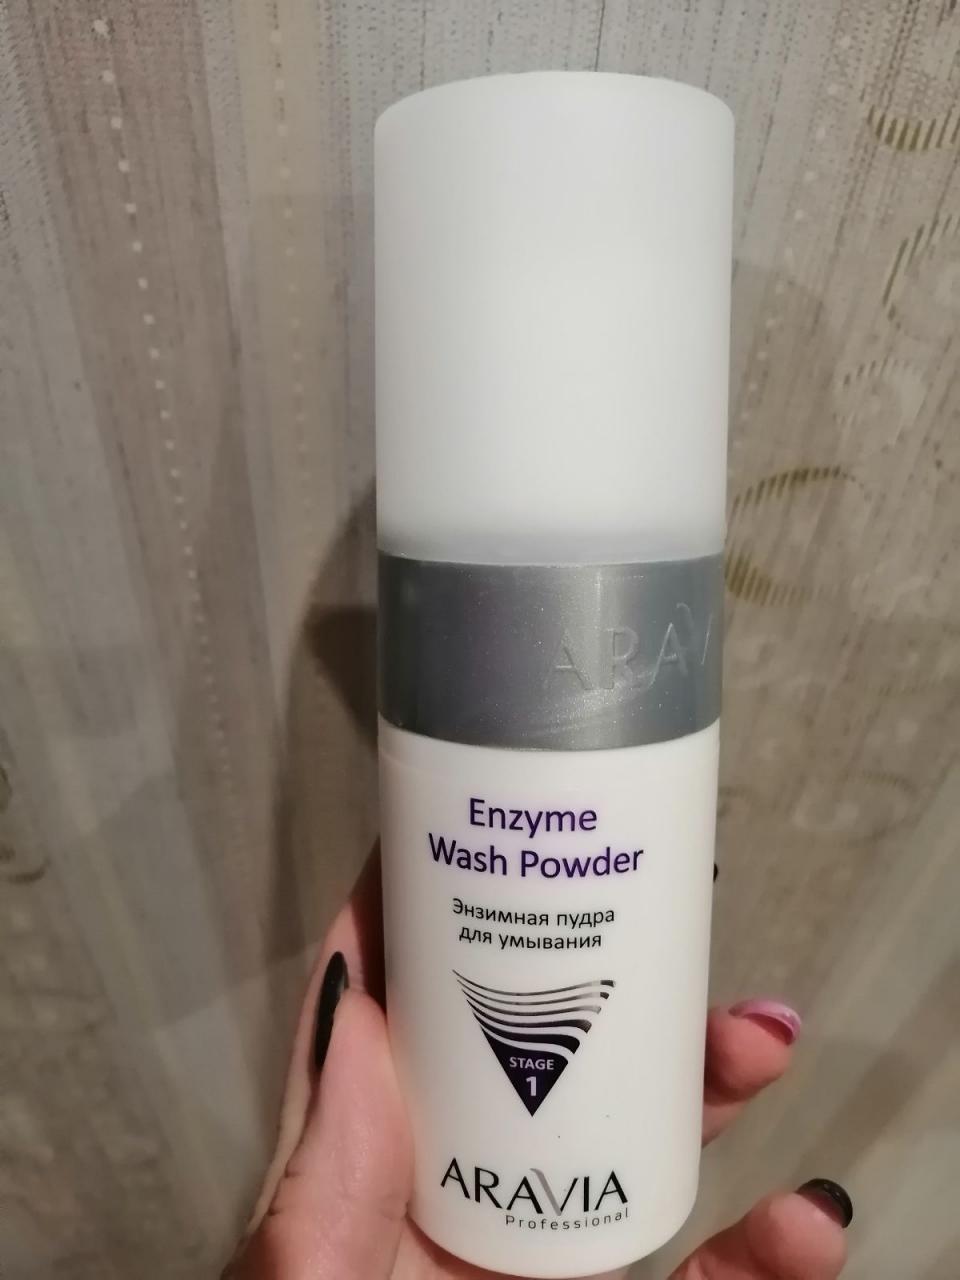 Отзыв на товар: Пудра энзимная для умывания "Enzyme Wash Powder". Aravia Professional.